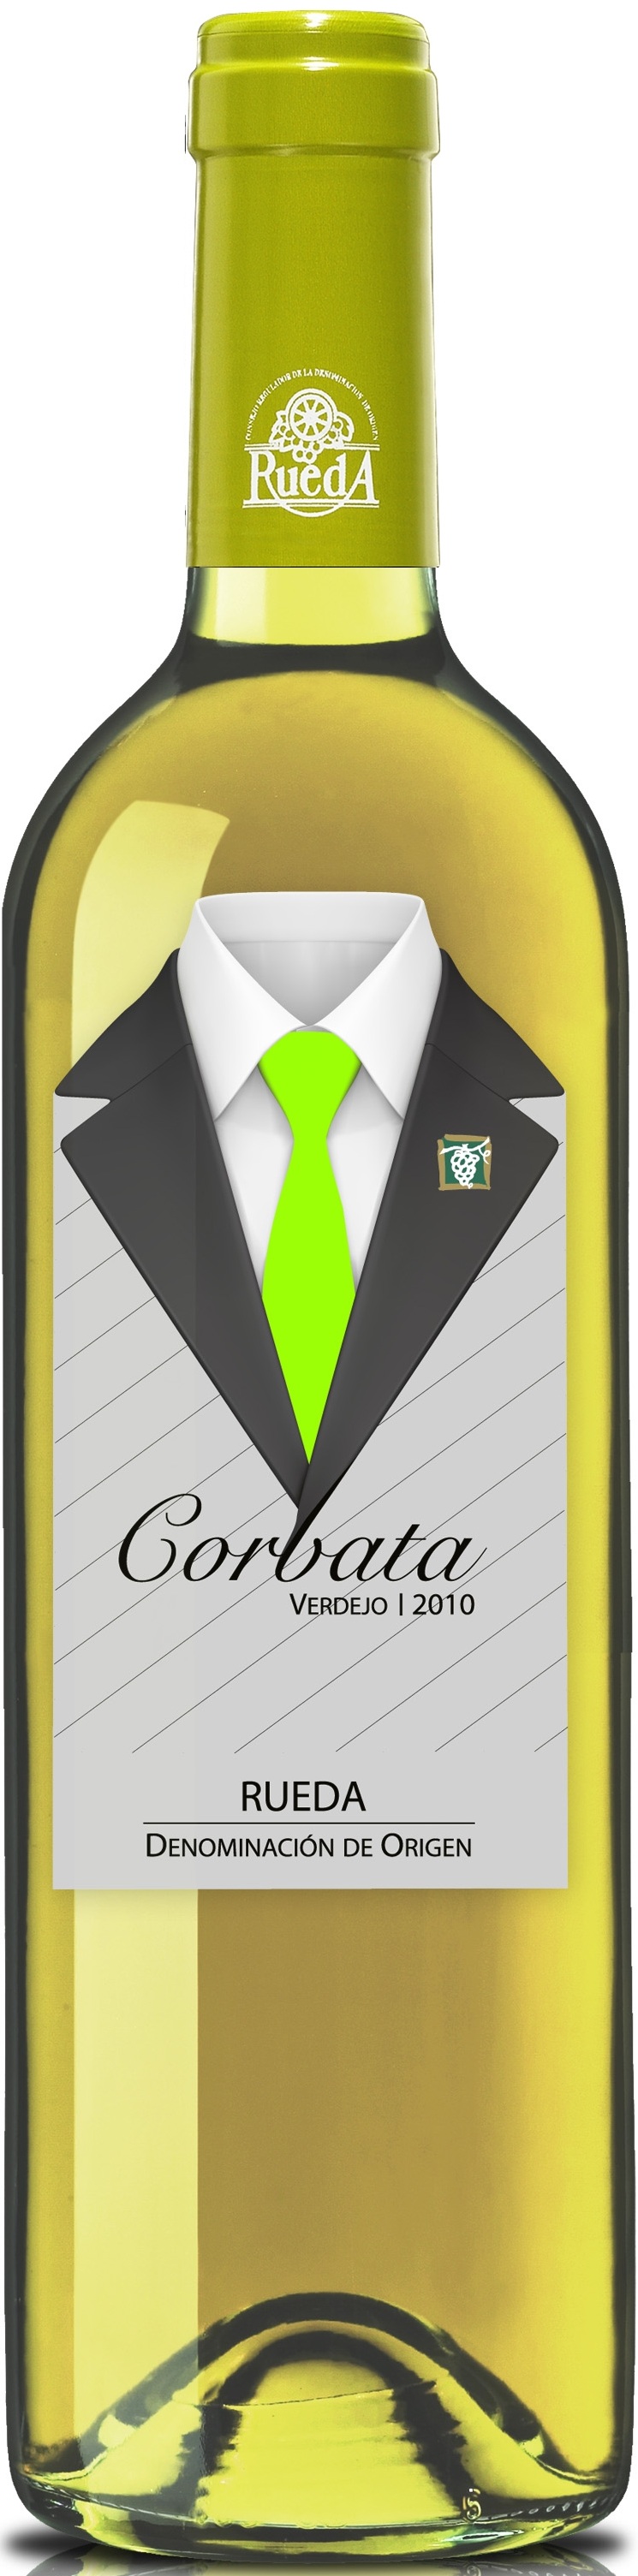 Logo del vino Corbata Verdejo